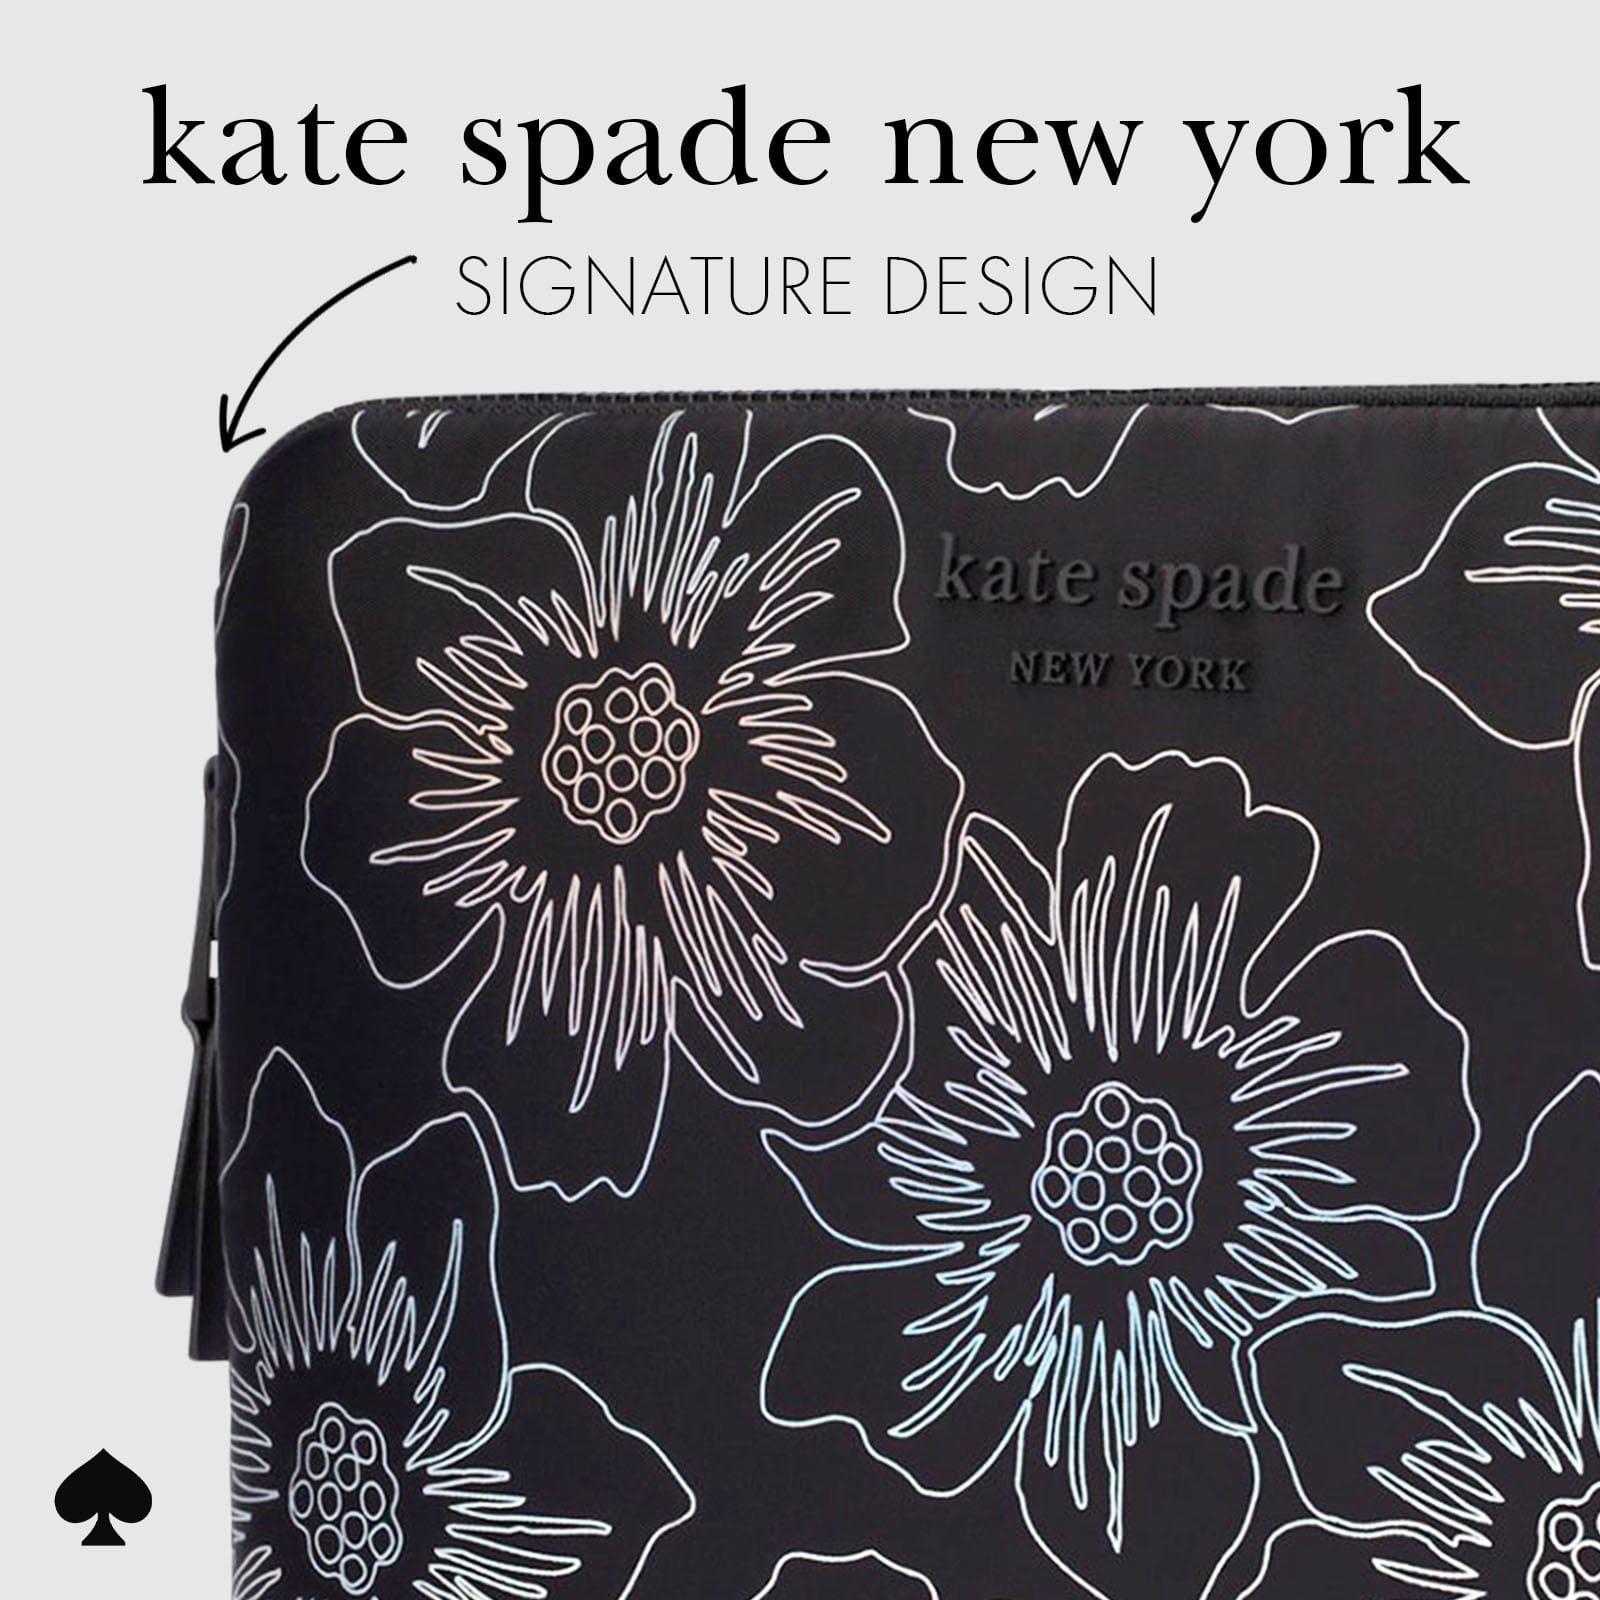 kate spade new york SIGNATURE DESIGN